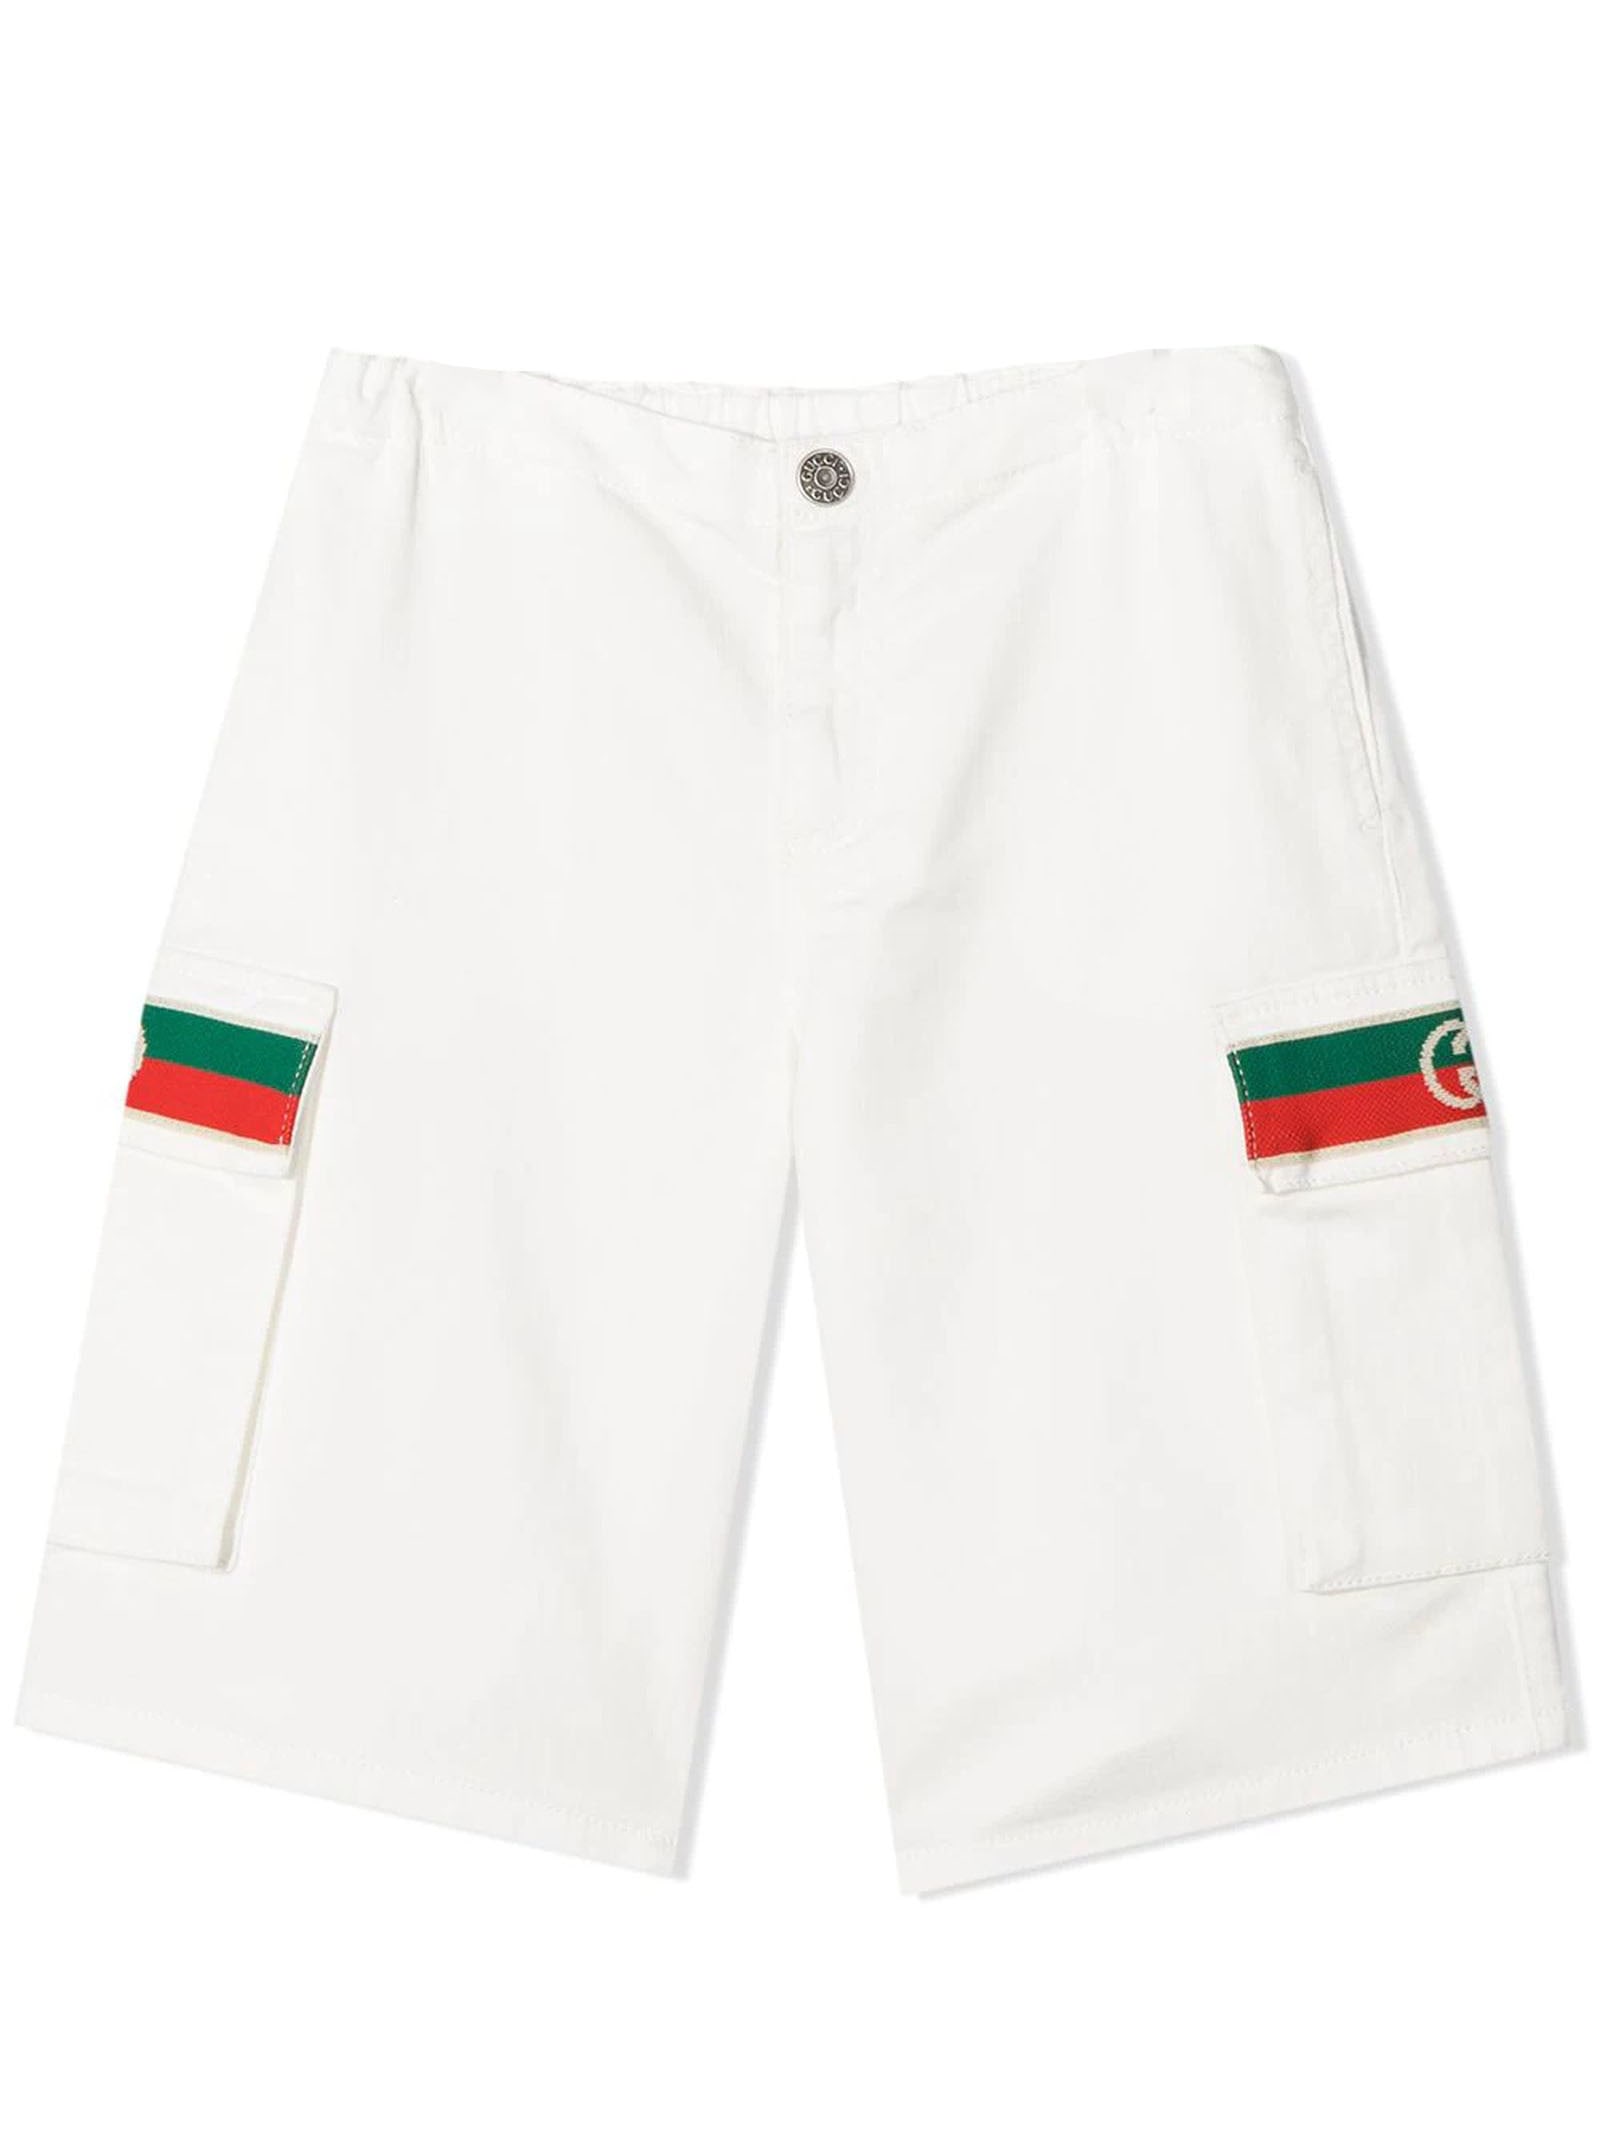 Gucci White Cotton Shorts